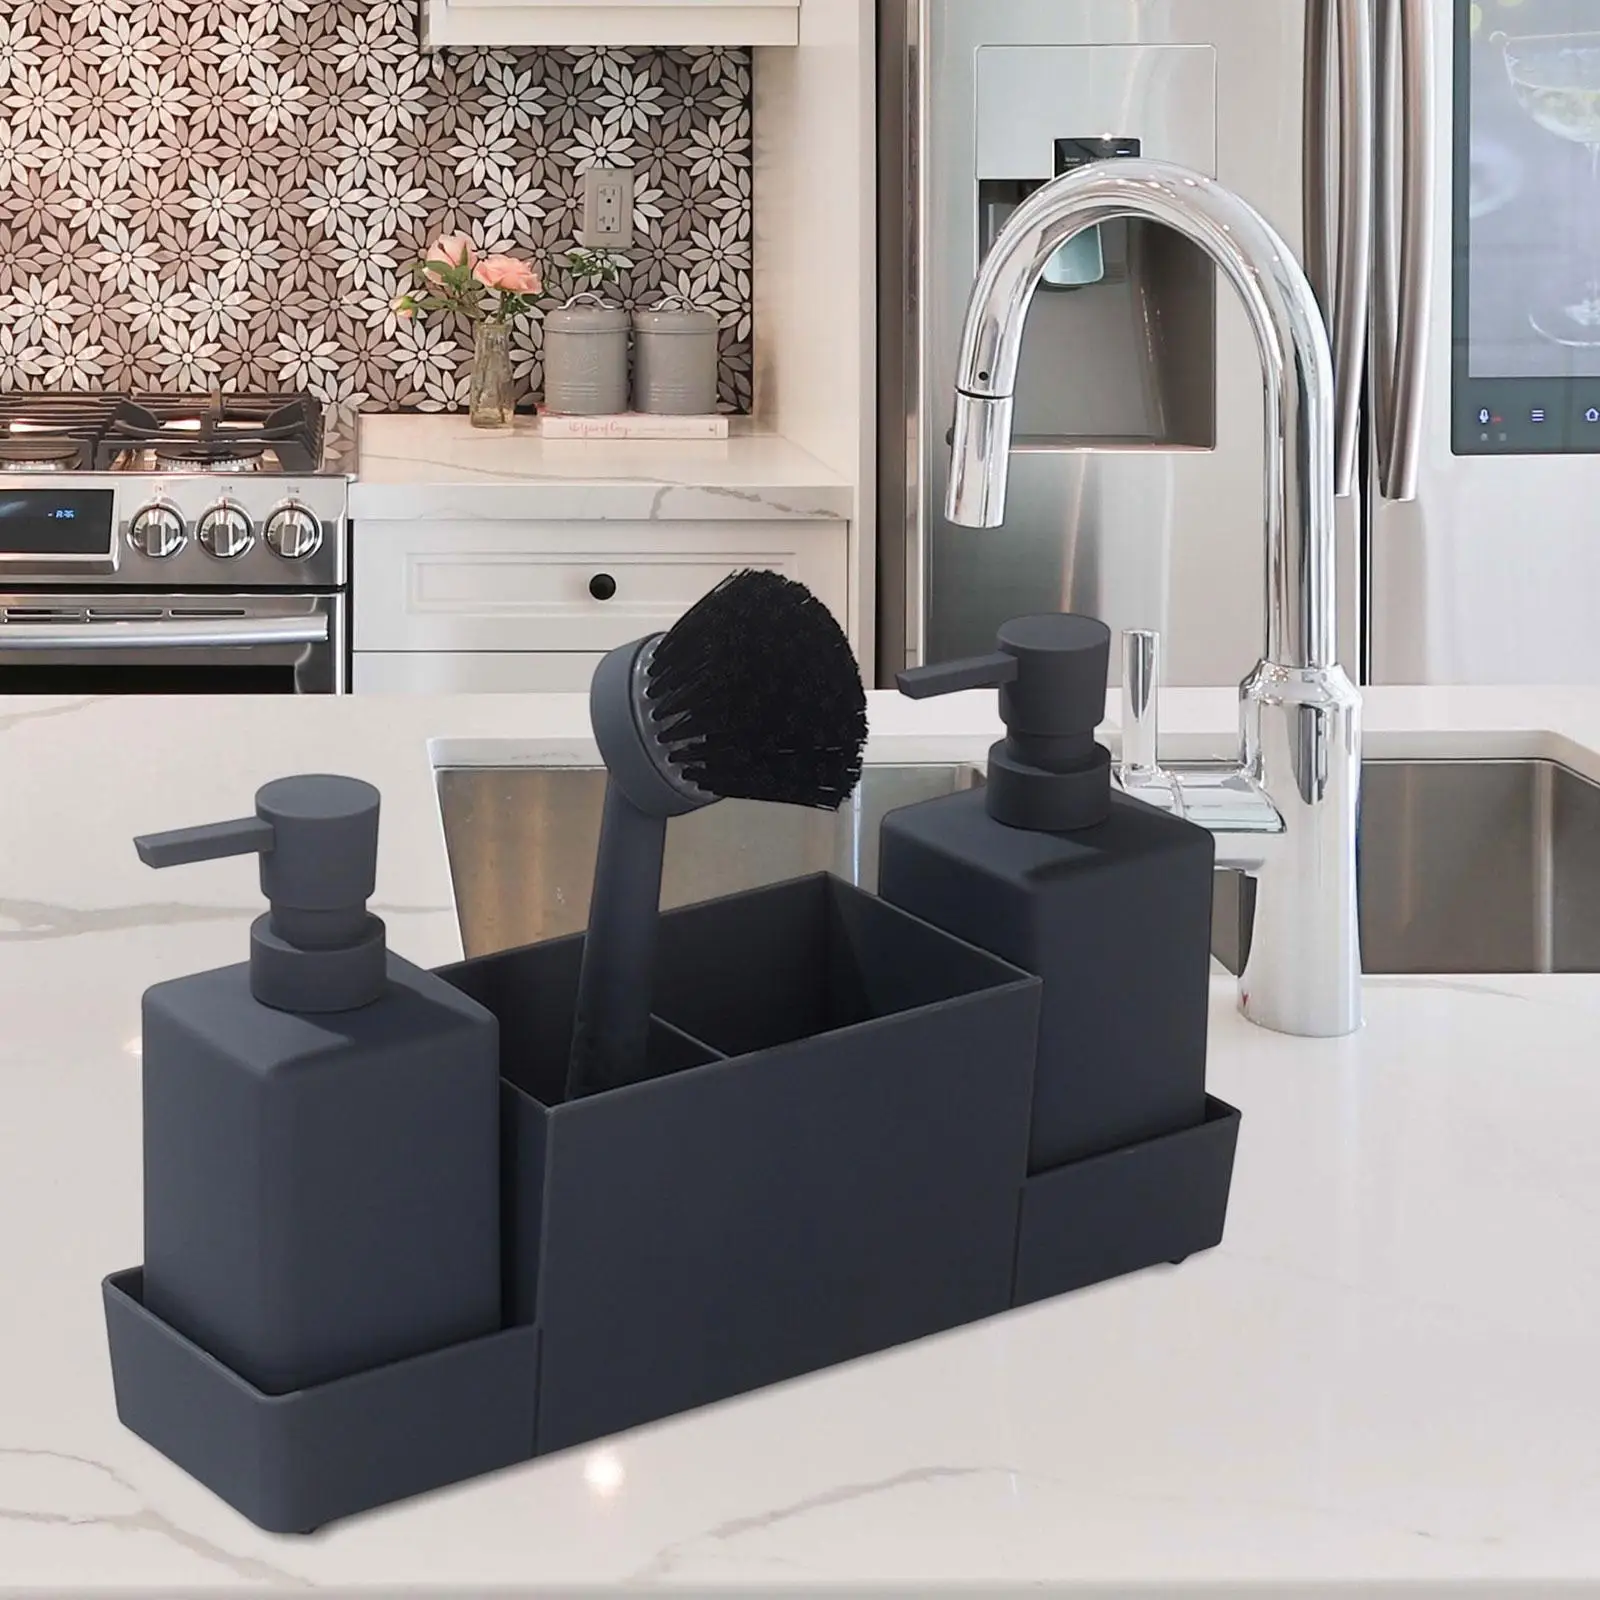 4 Piece Liquid Soap Dispenser Kitchen Soap Dispenser with Sponge Holder Portable